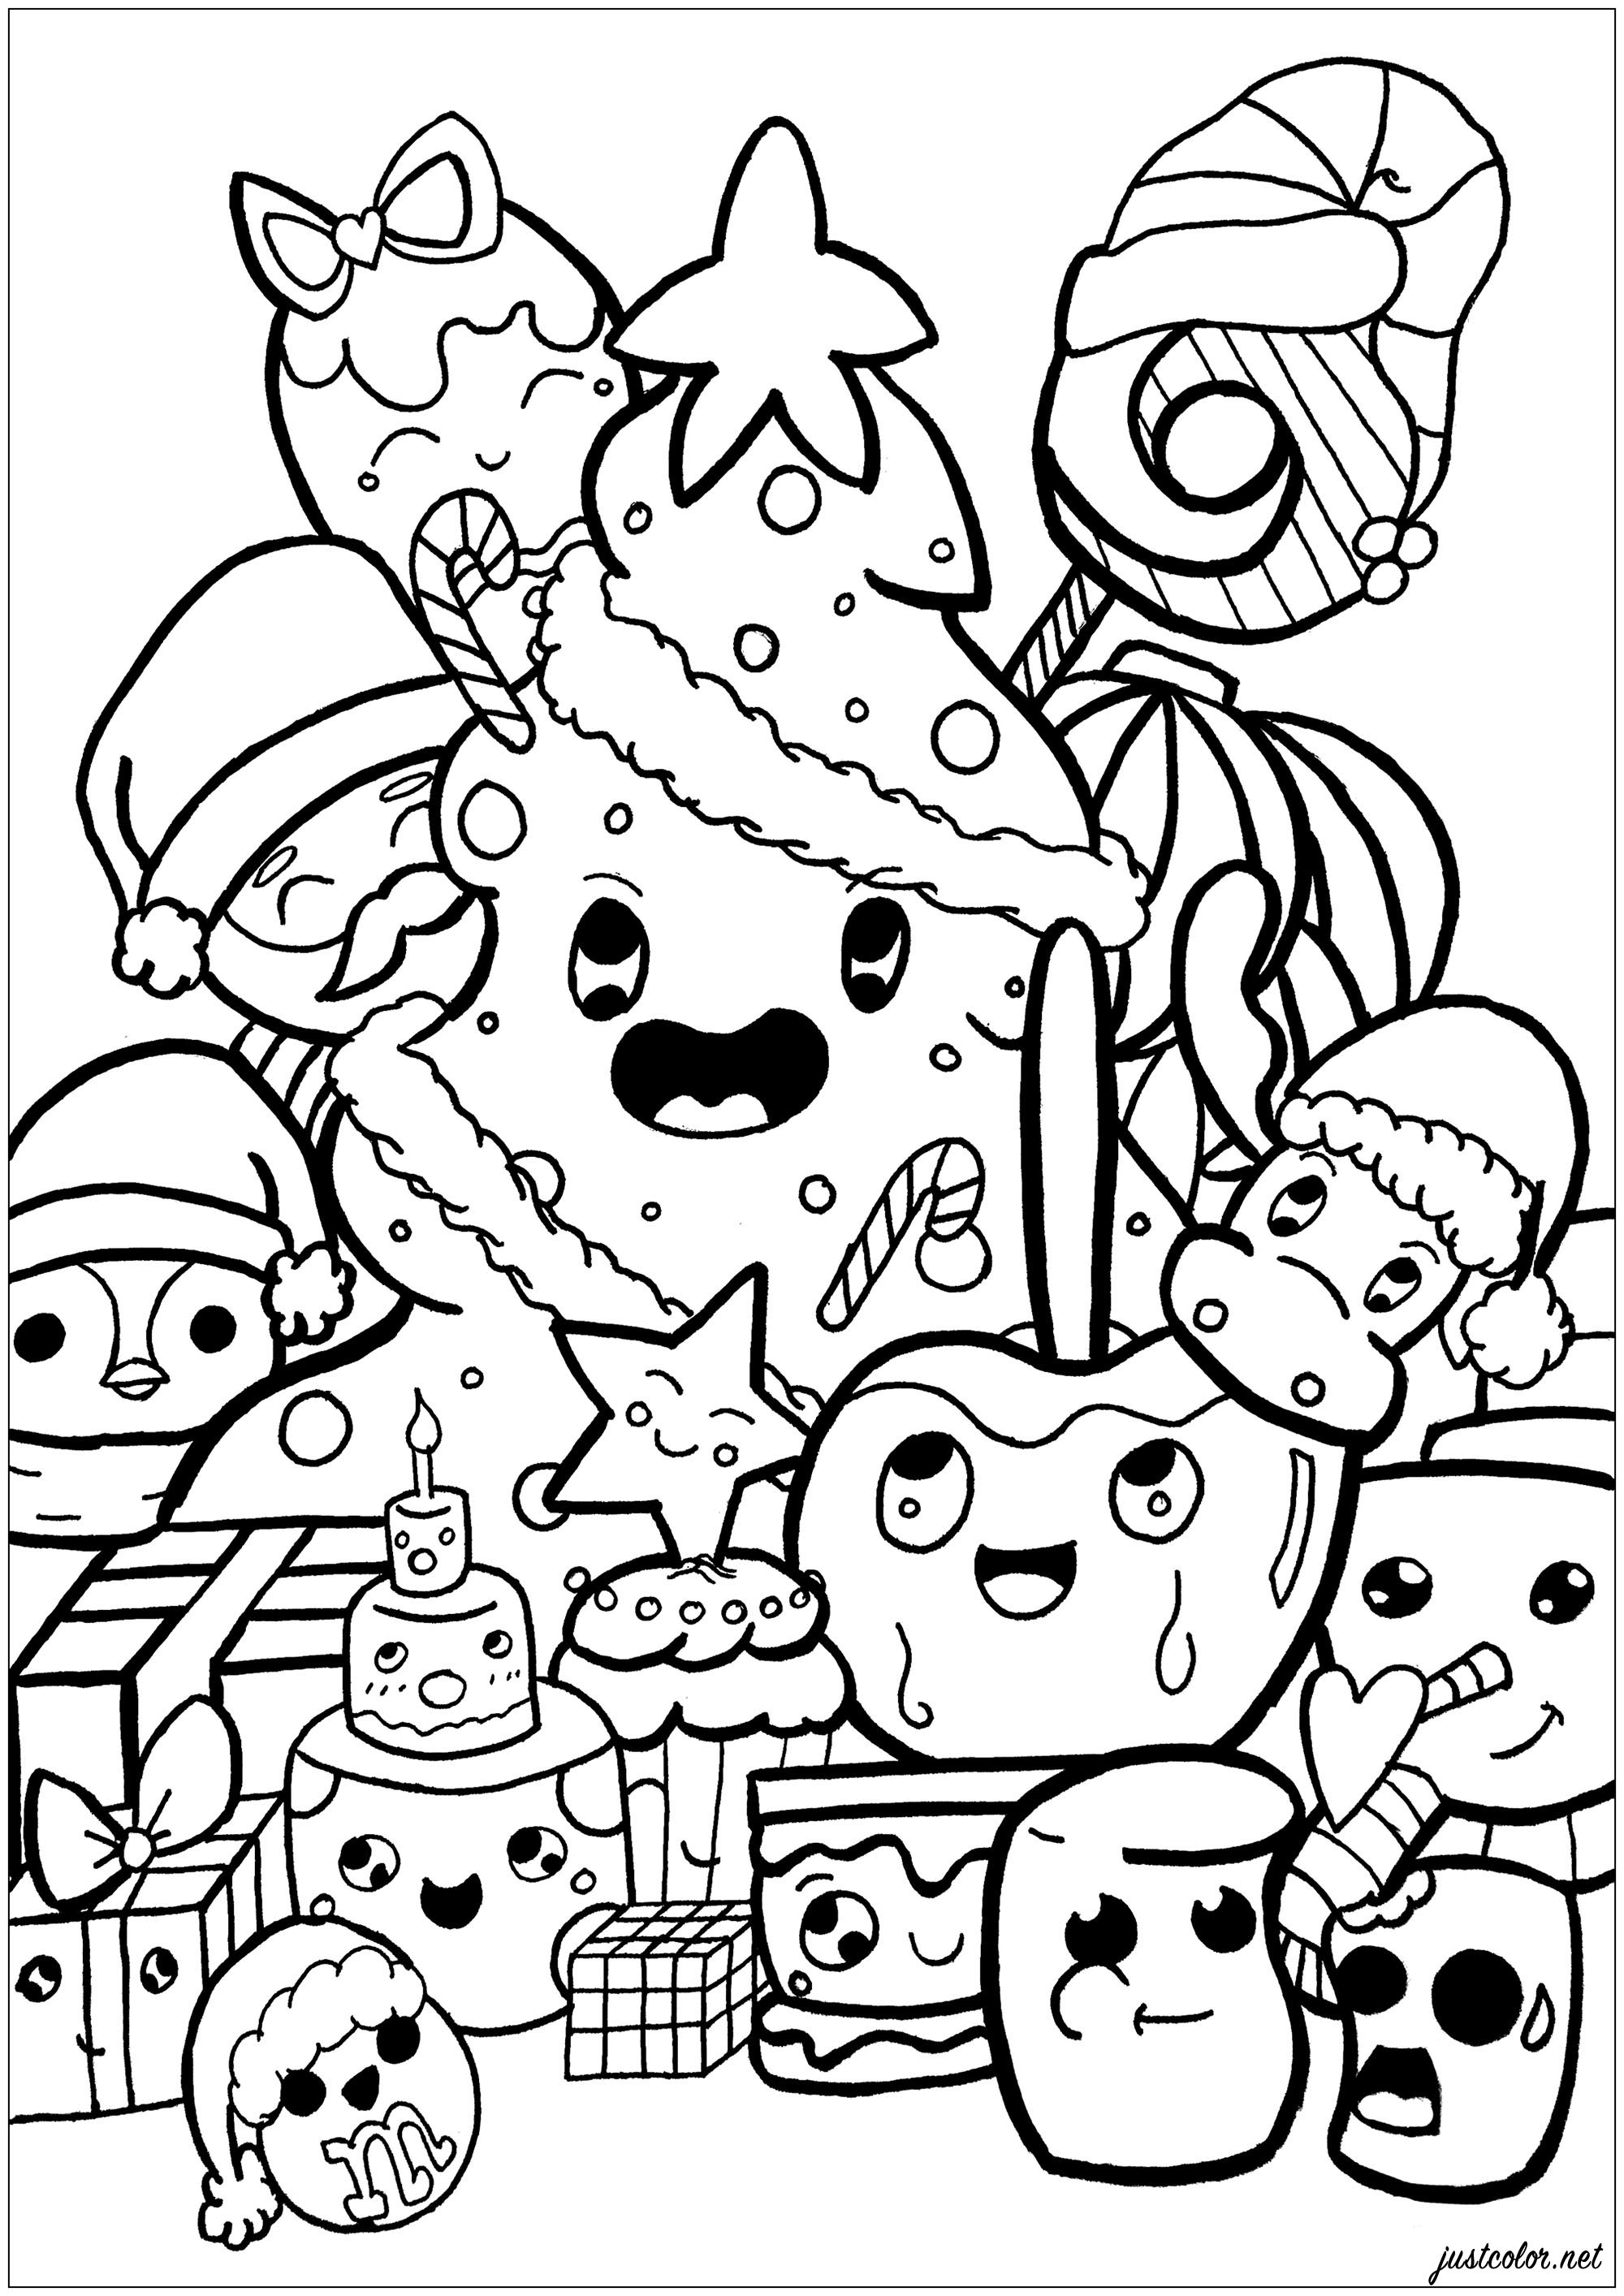 Disegni da Colorare per Adulti : Doodle art / Doodling - 2